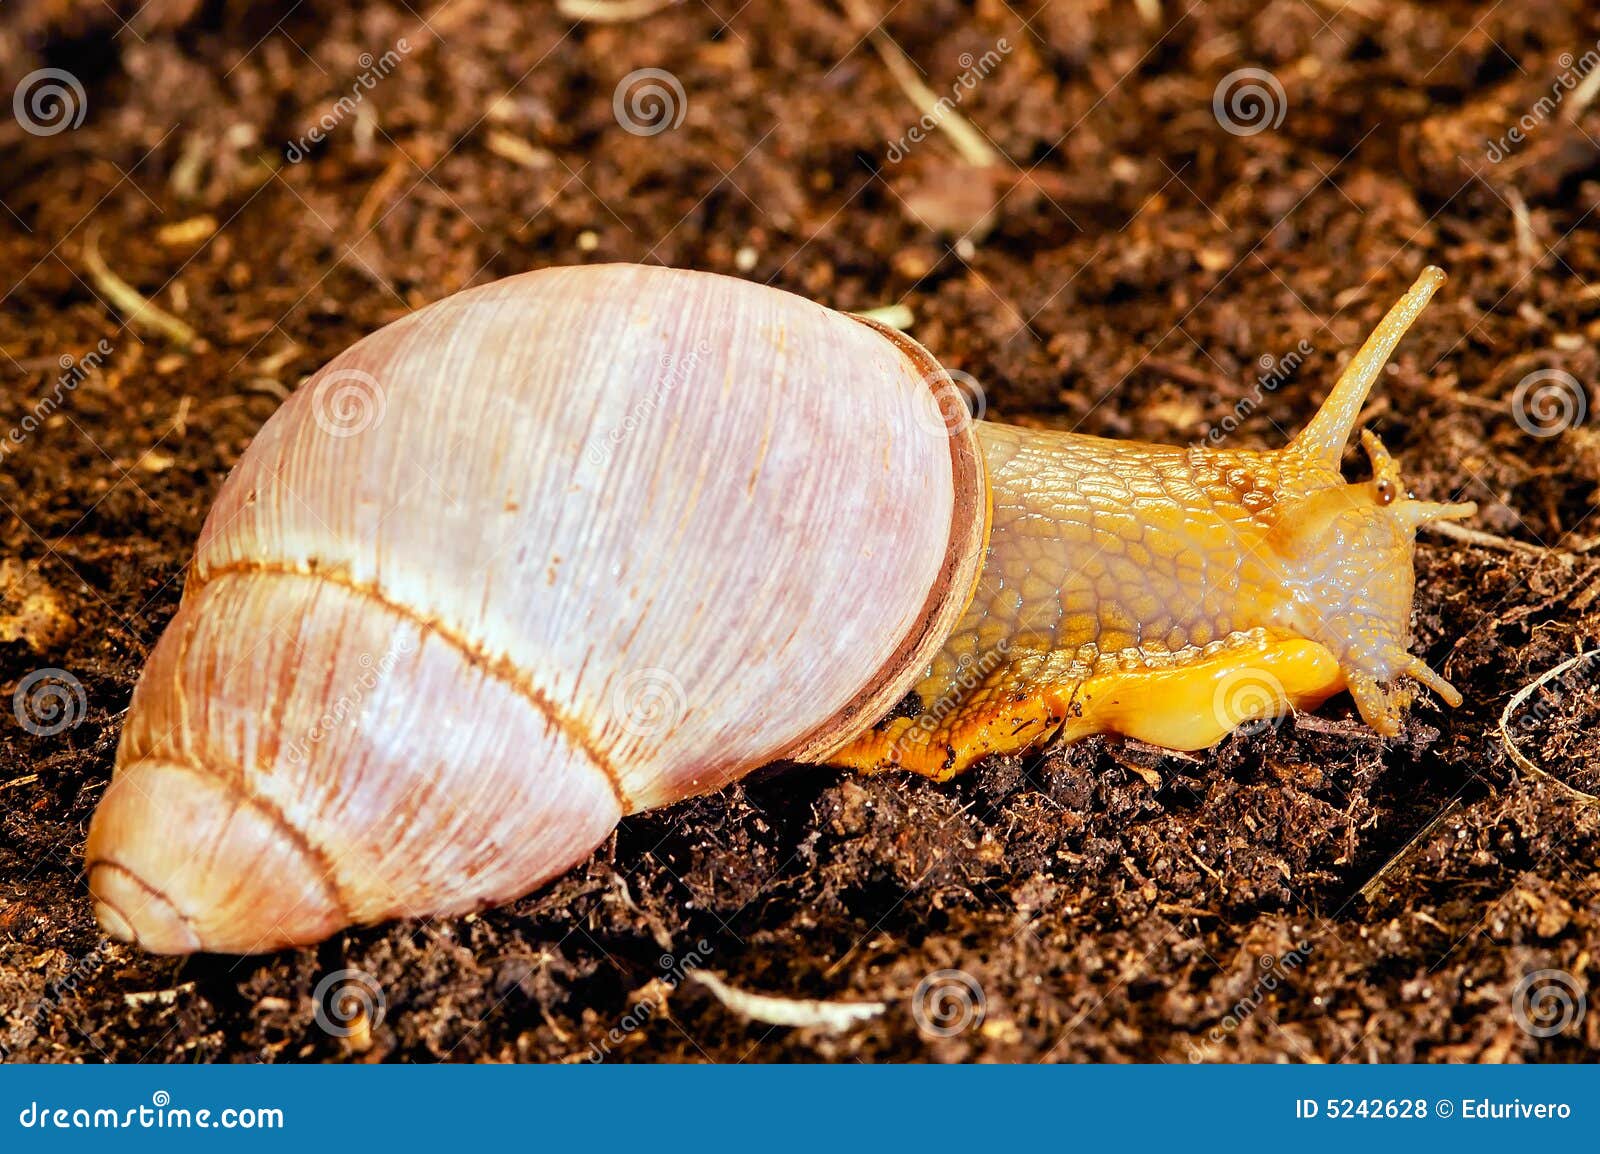 giant terrestrial snail